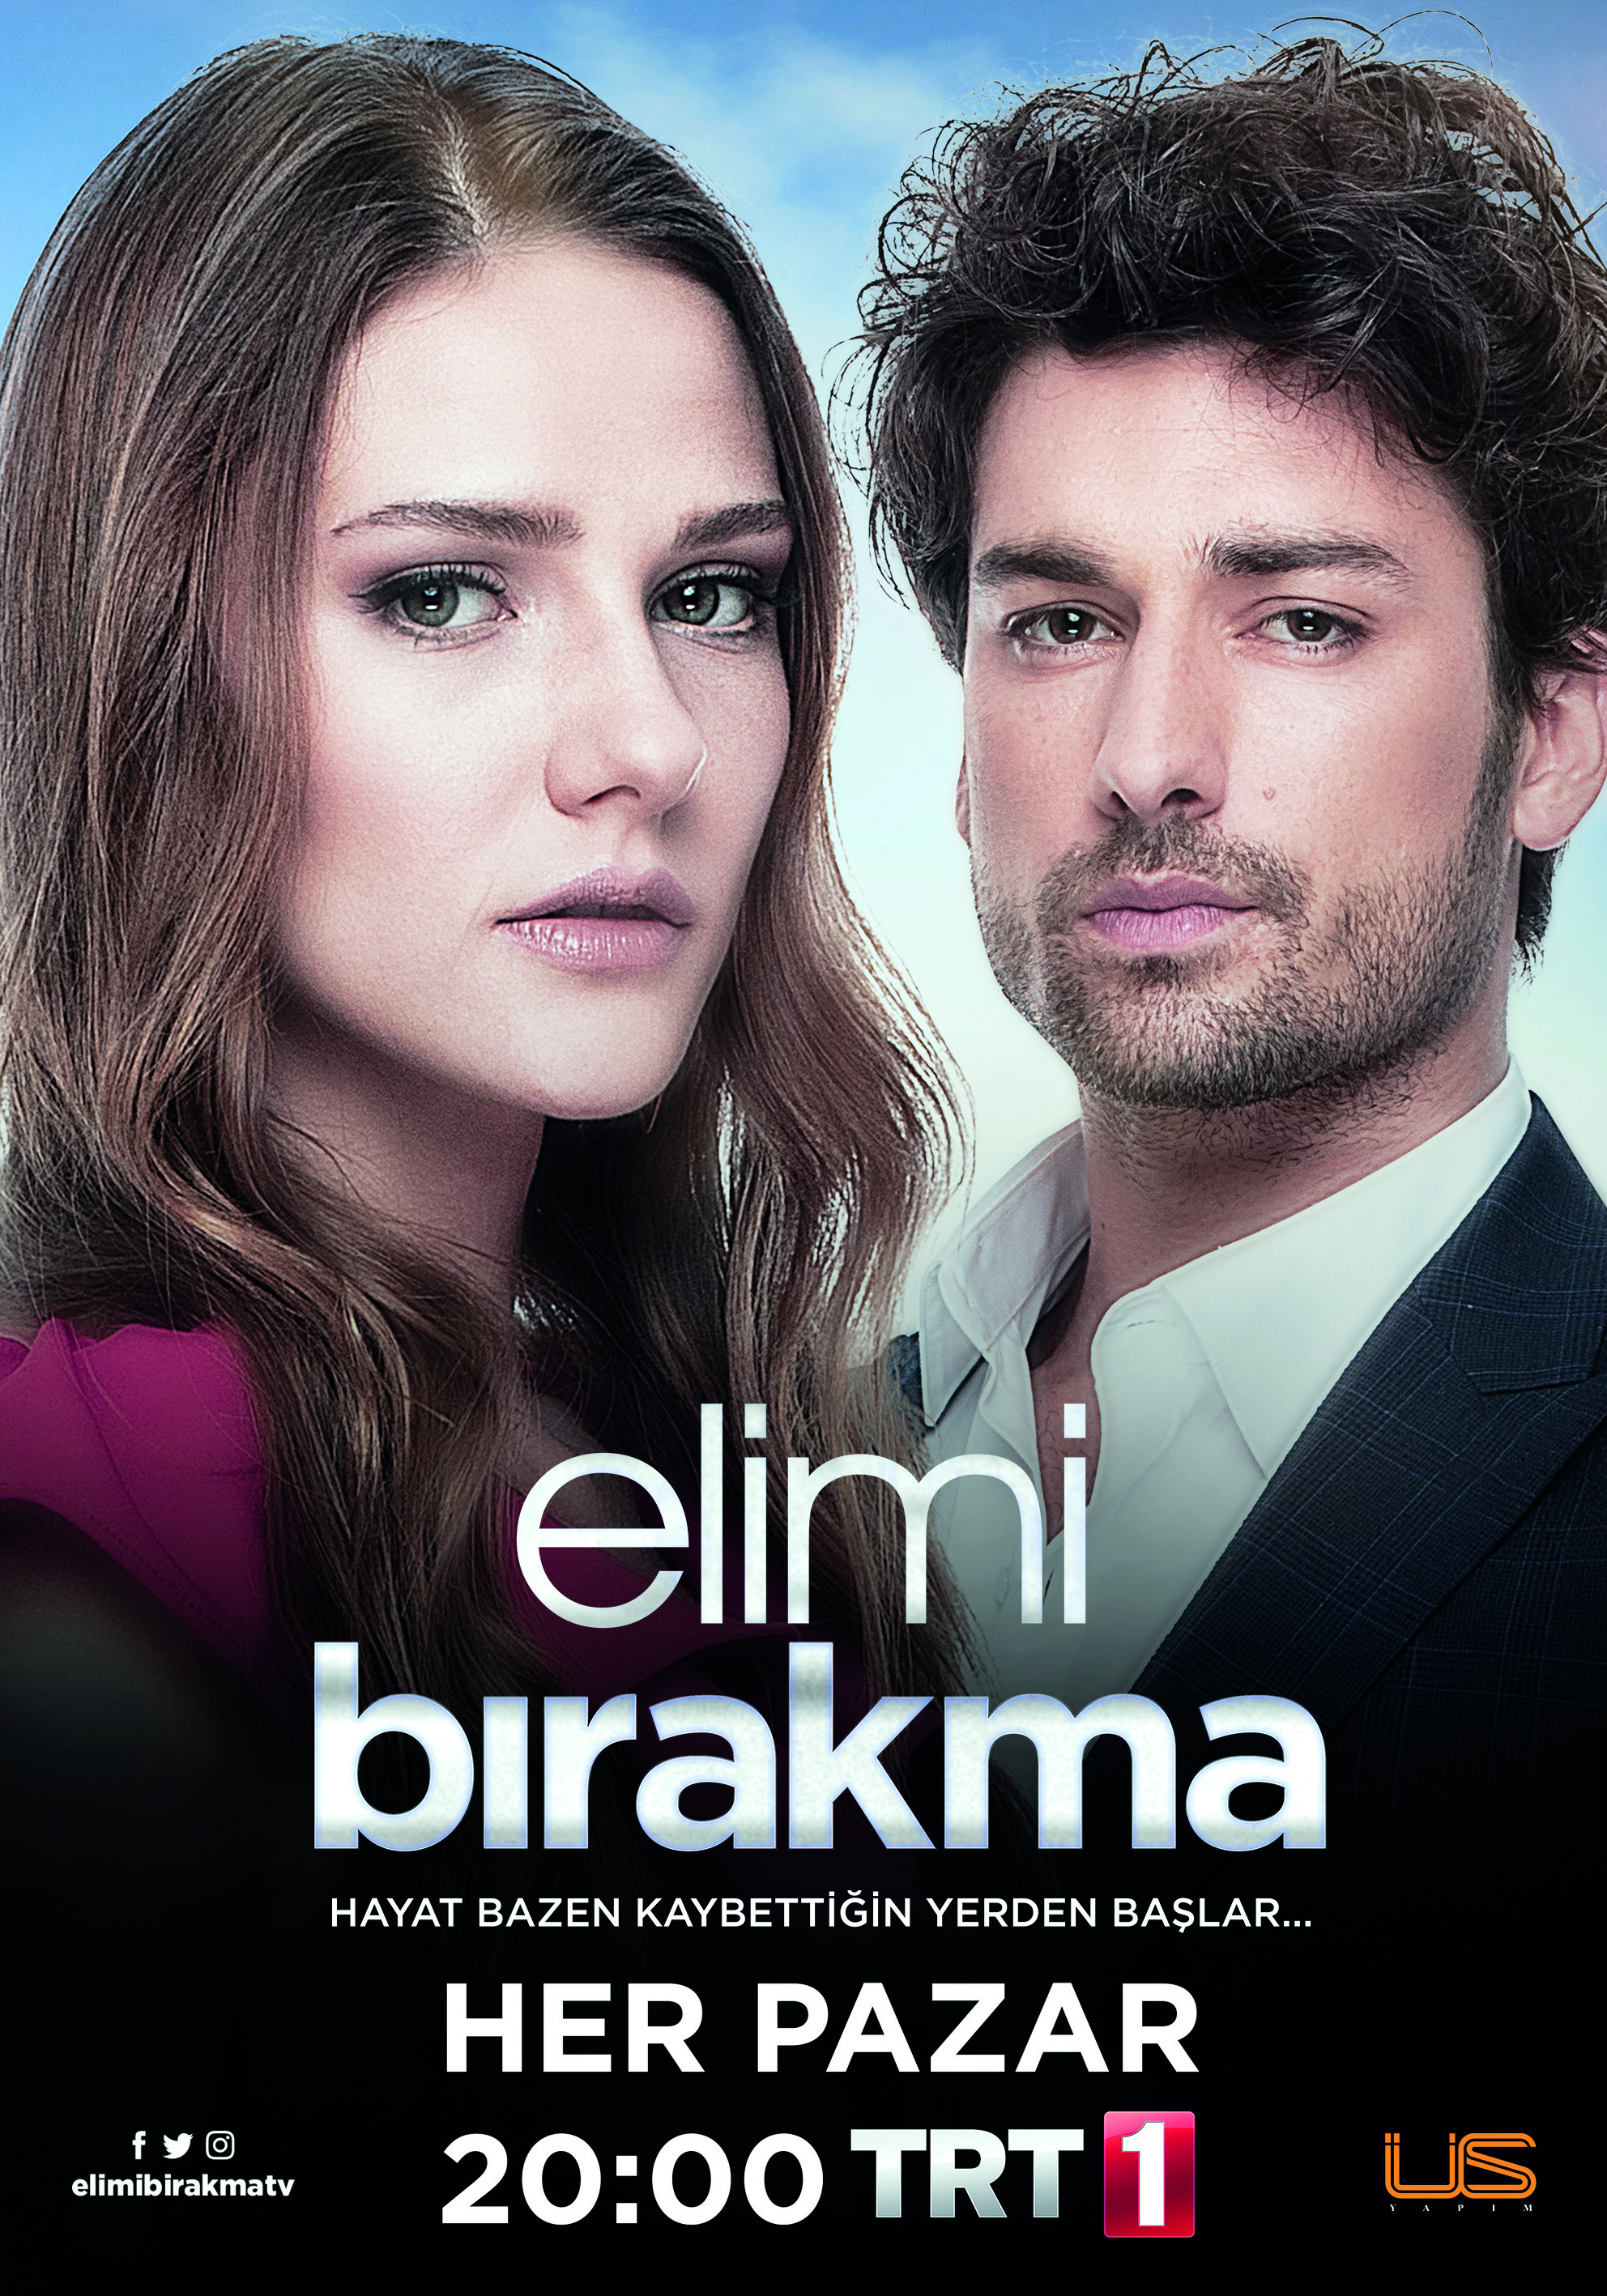 Mega Sized Movie Poster Image for Elimi birakma (#1 of 20)